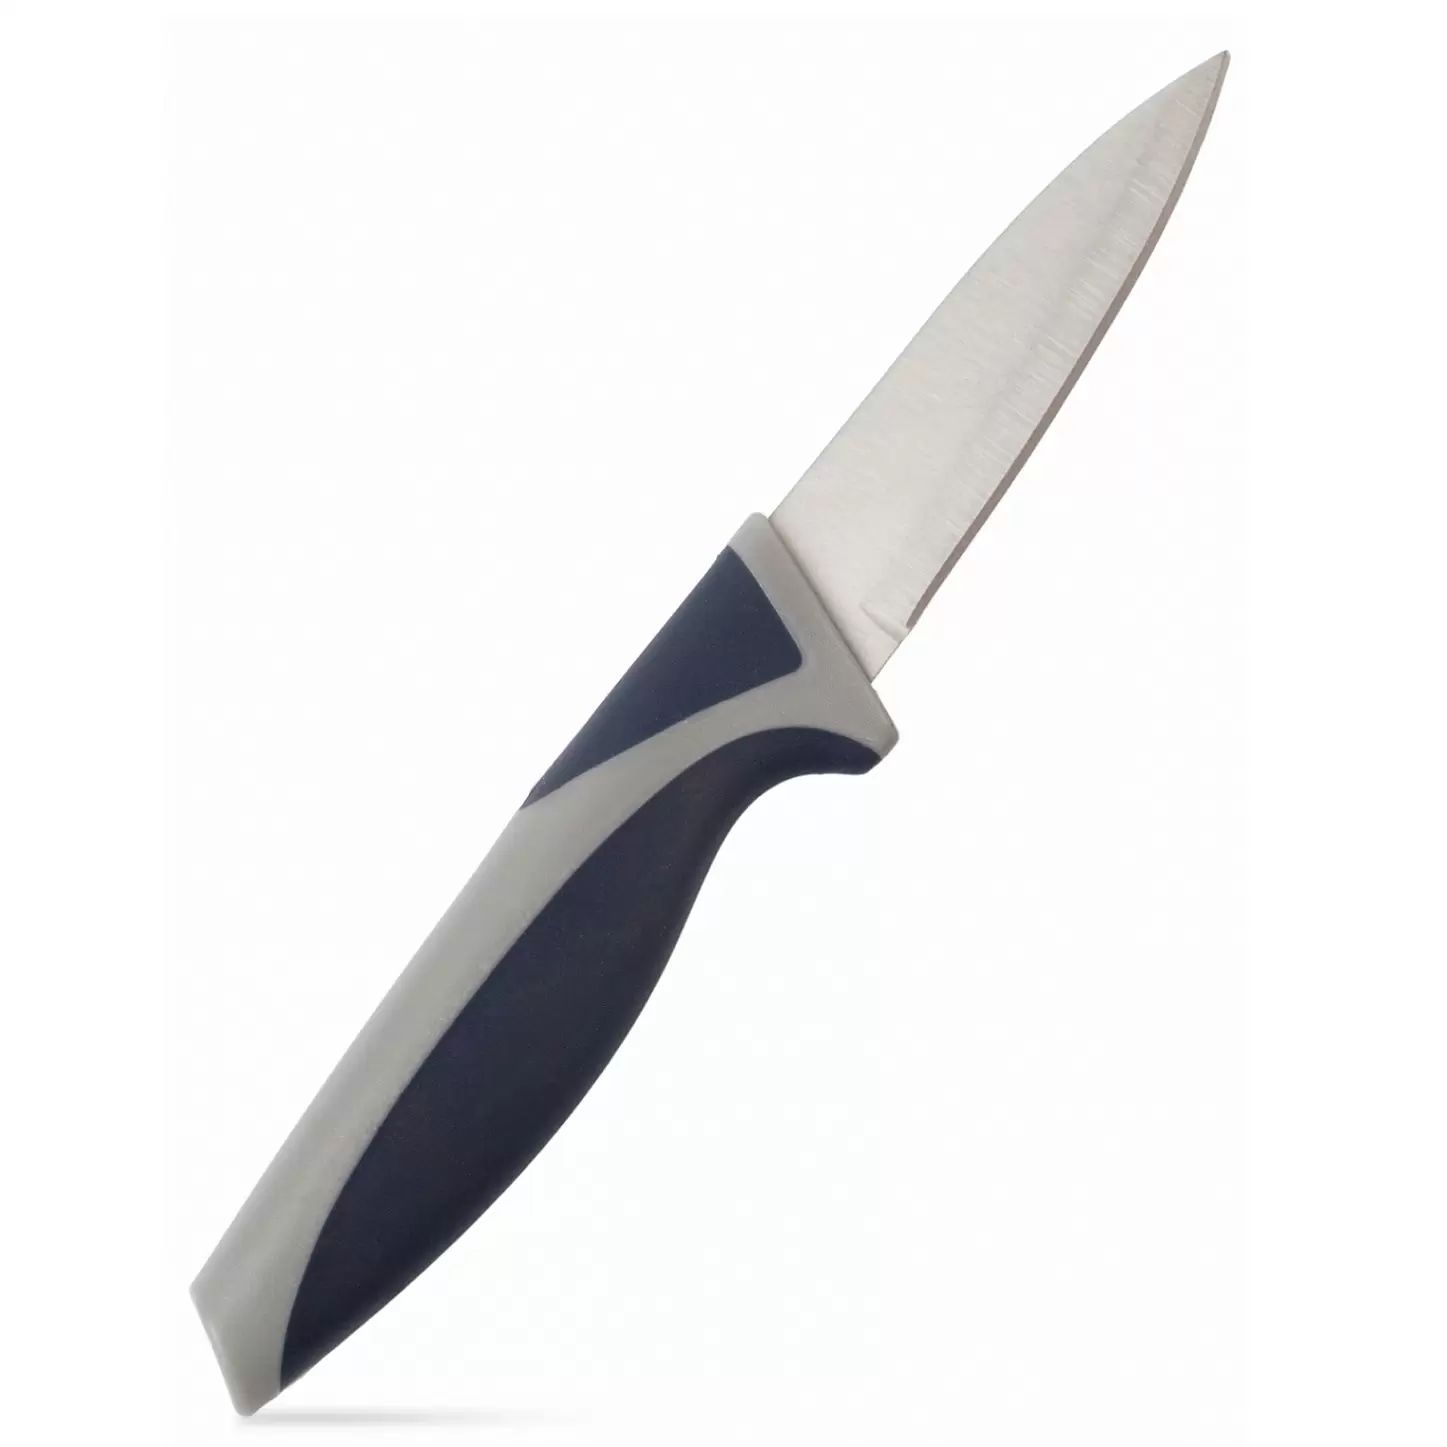 Нож для фруктов FJORD 9см, пластиковый чехол ATTRIBUTE KNIFE AKF004 нож для фруктов attribute knife antique aka004 9см